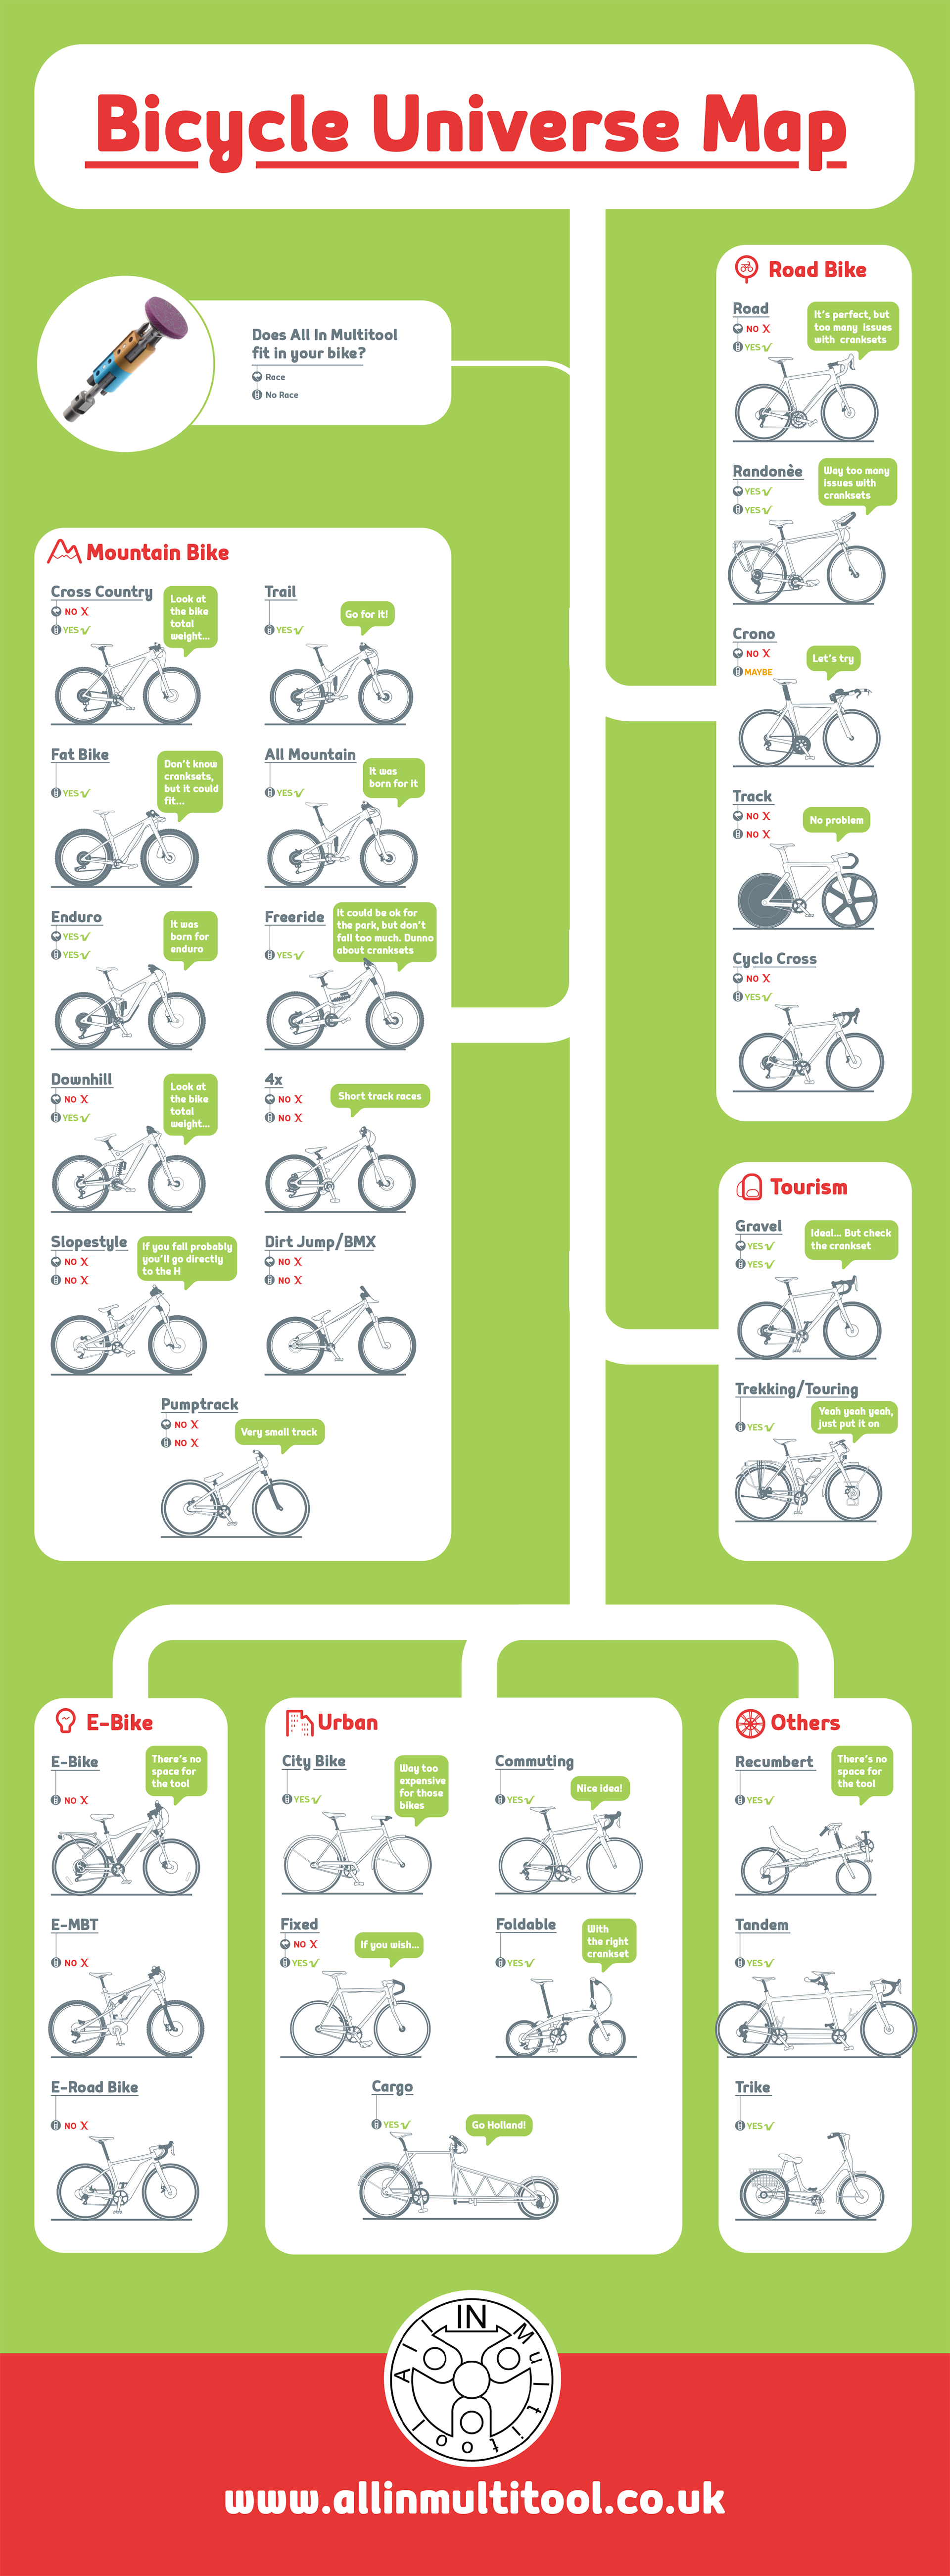 Bicycle Universe Map